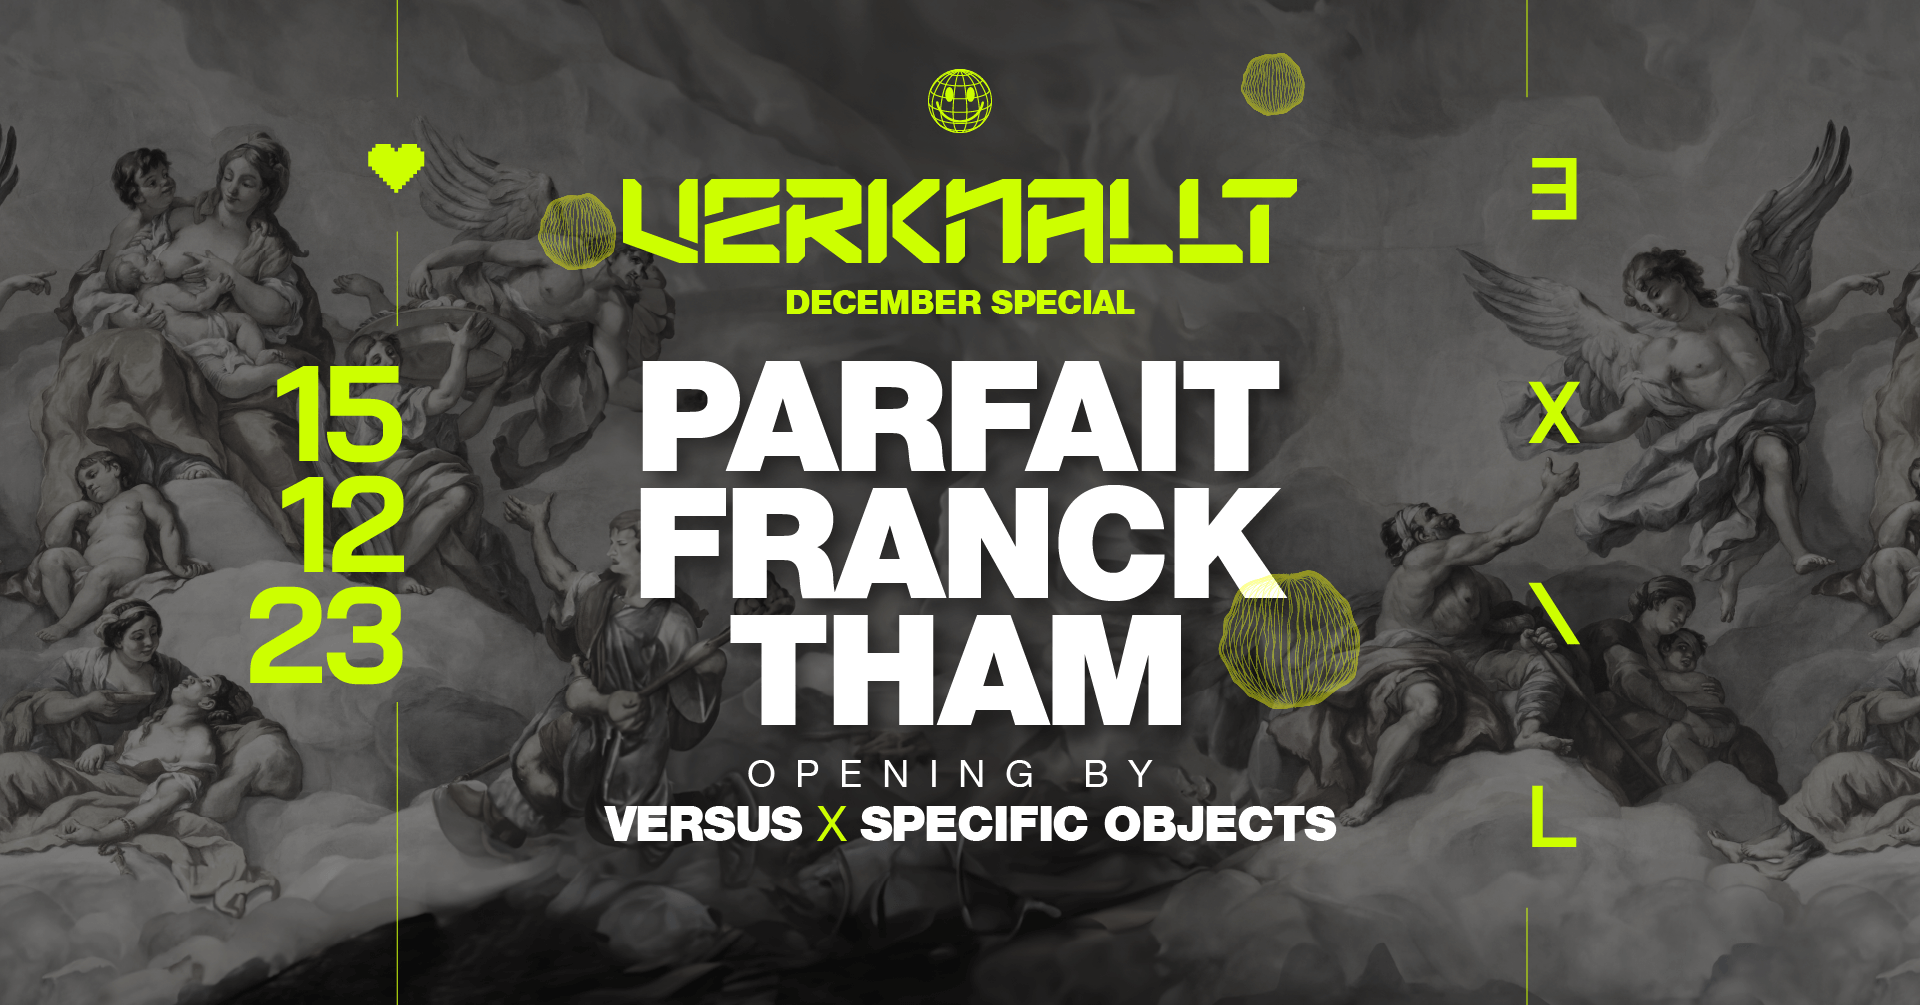 Verknallt with Parfait, Franck, Tham - フライヤー裏